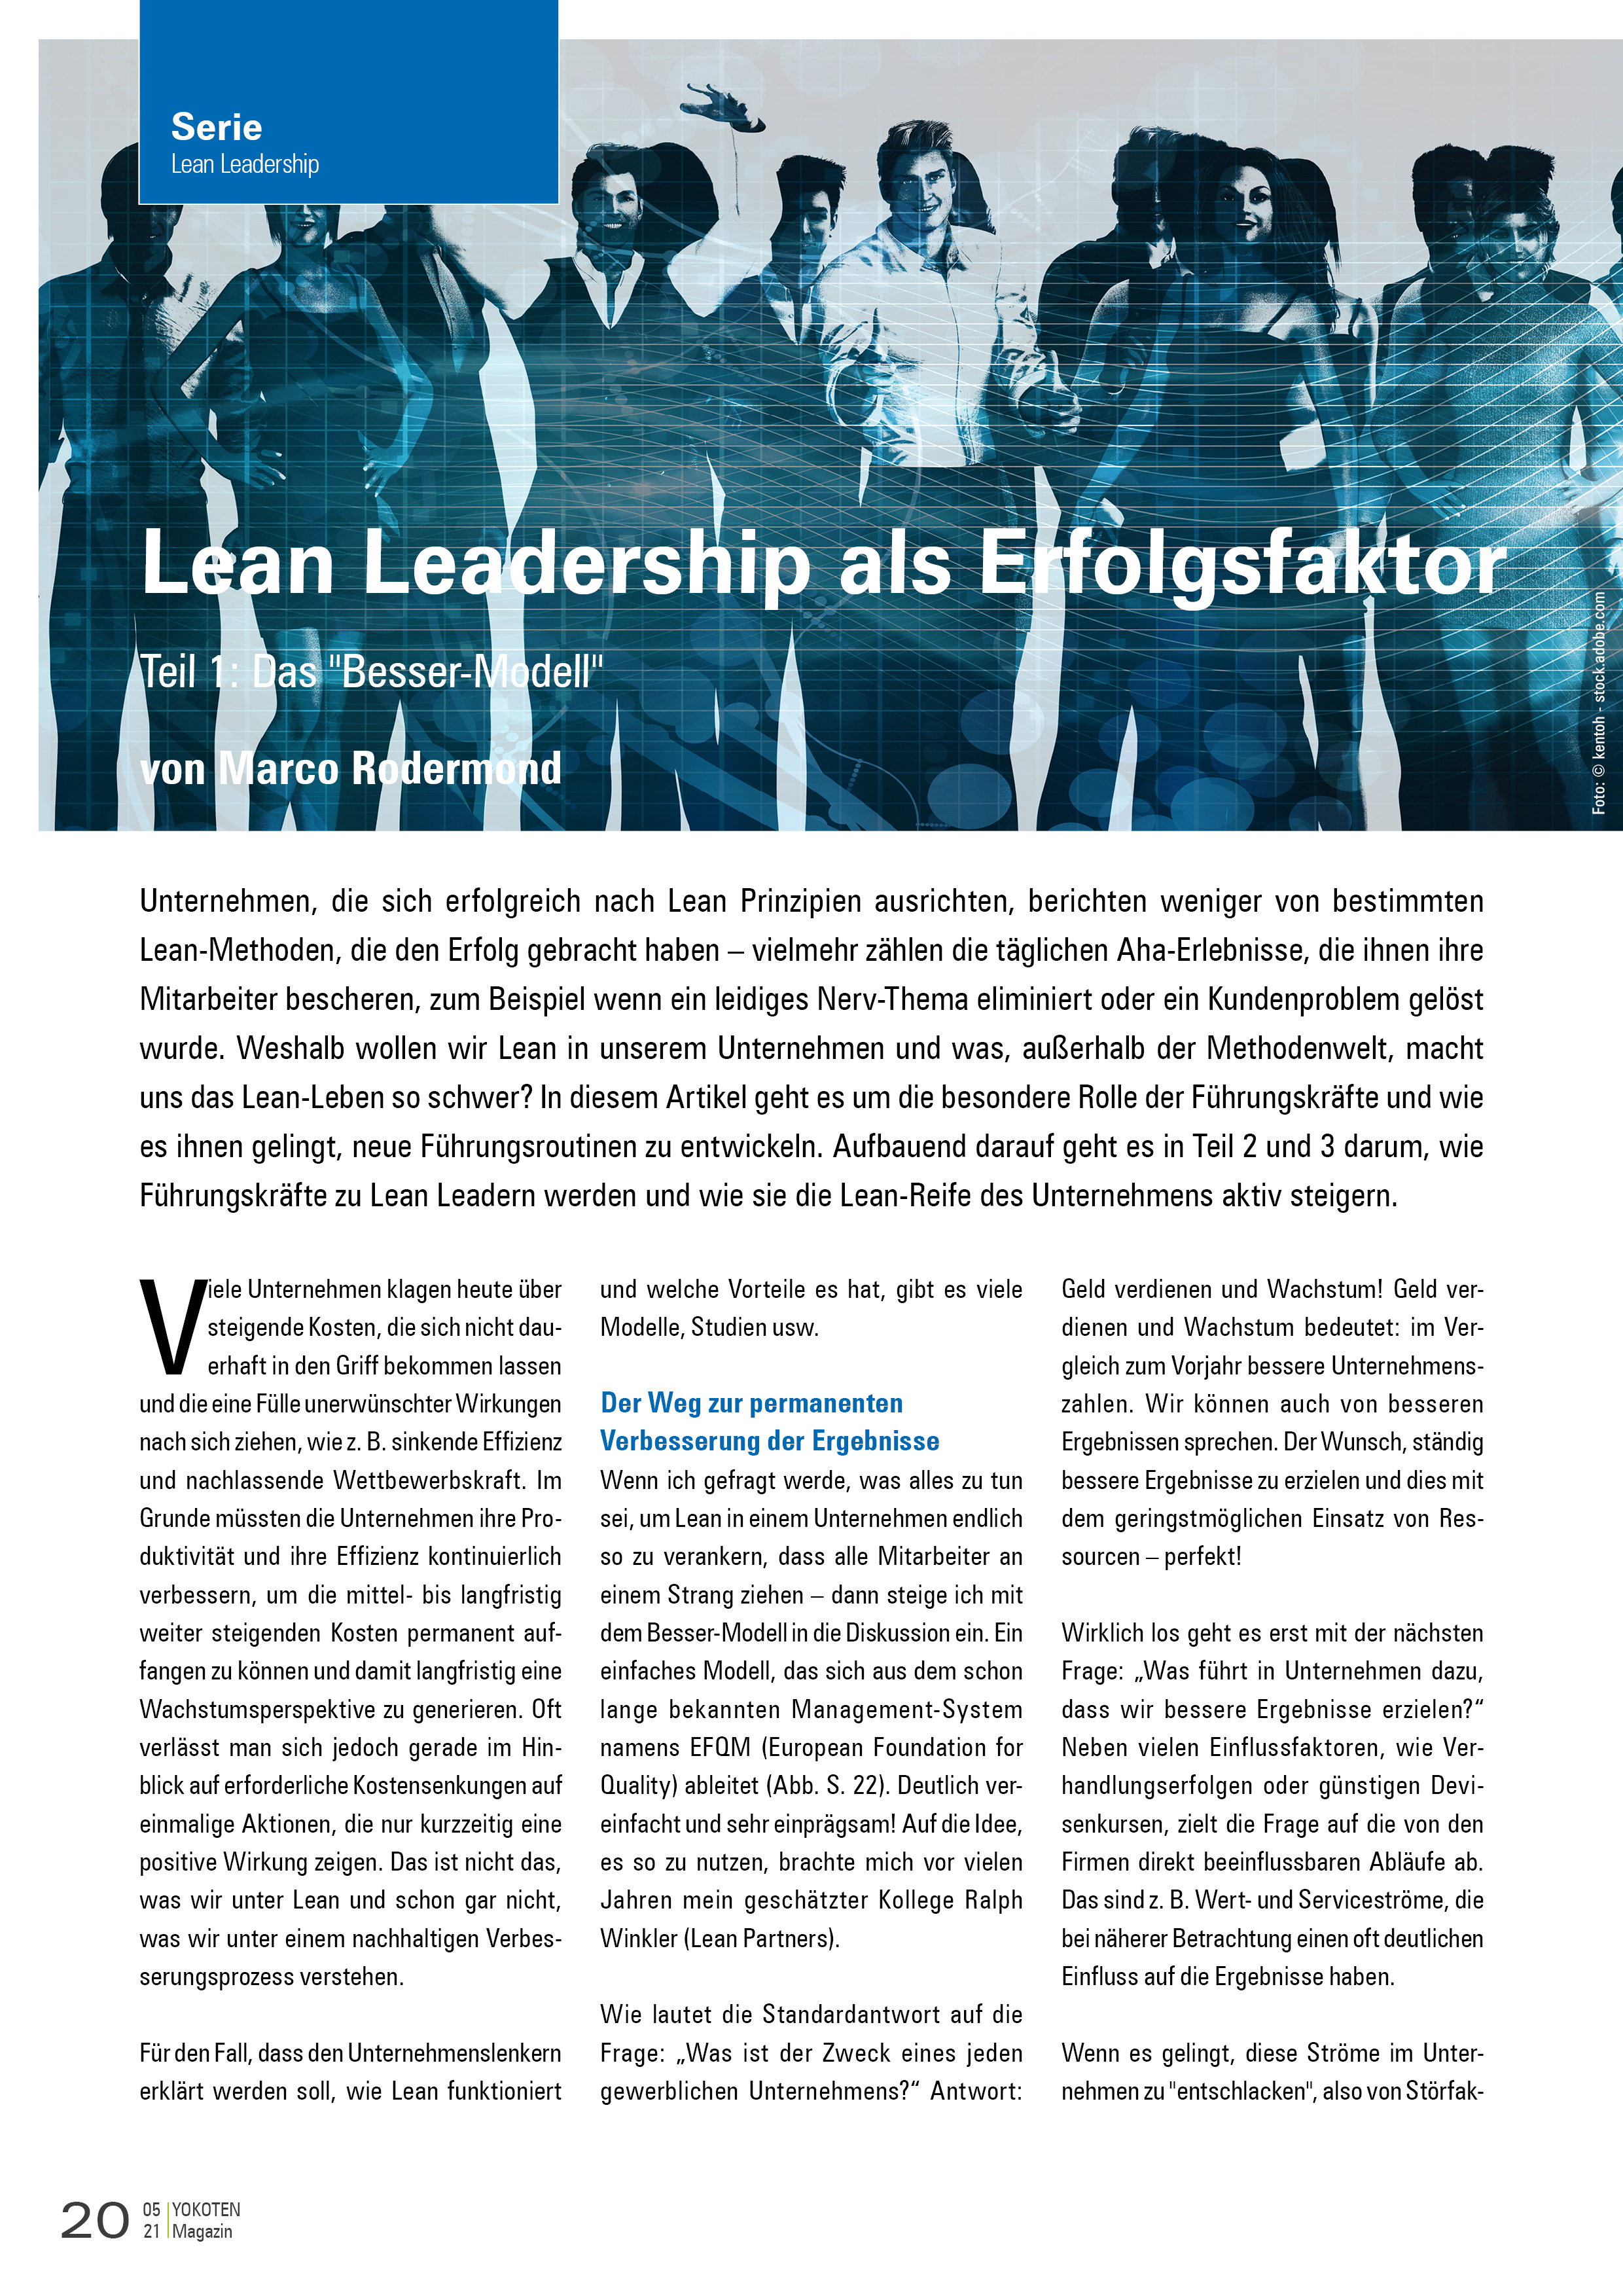 Lean Leadership als Erfolgsfaktor  - Artikel aus Fachmagazin YOKOTEN 2021-05